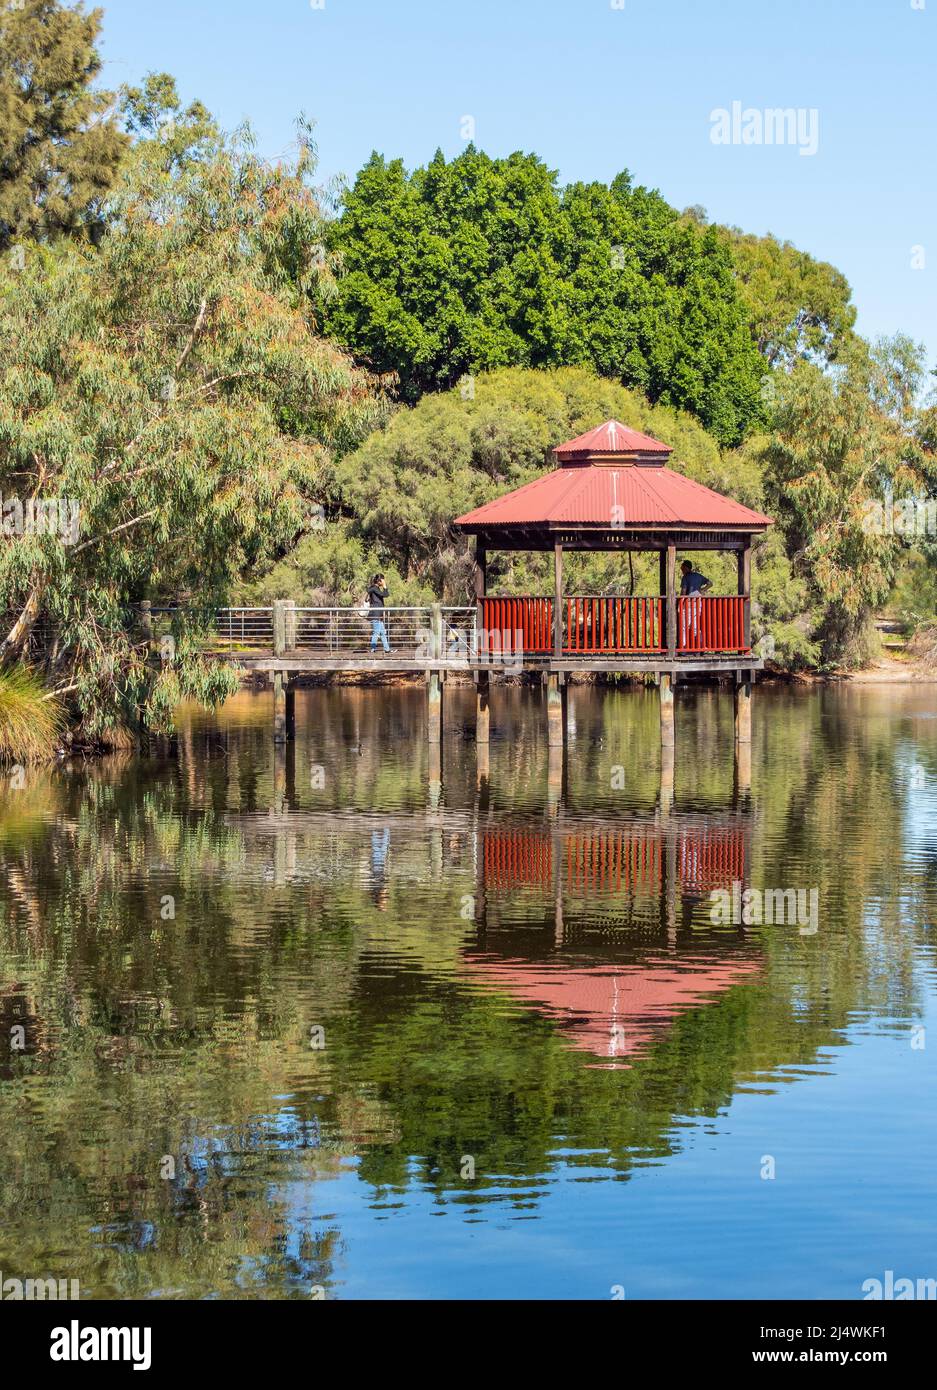 The gazebo and boardwalk at Tomato Lake in Kewdale, Perth, Western Australia. Stock Photo